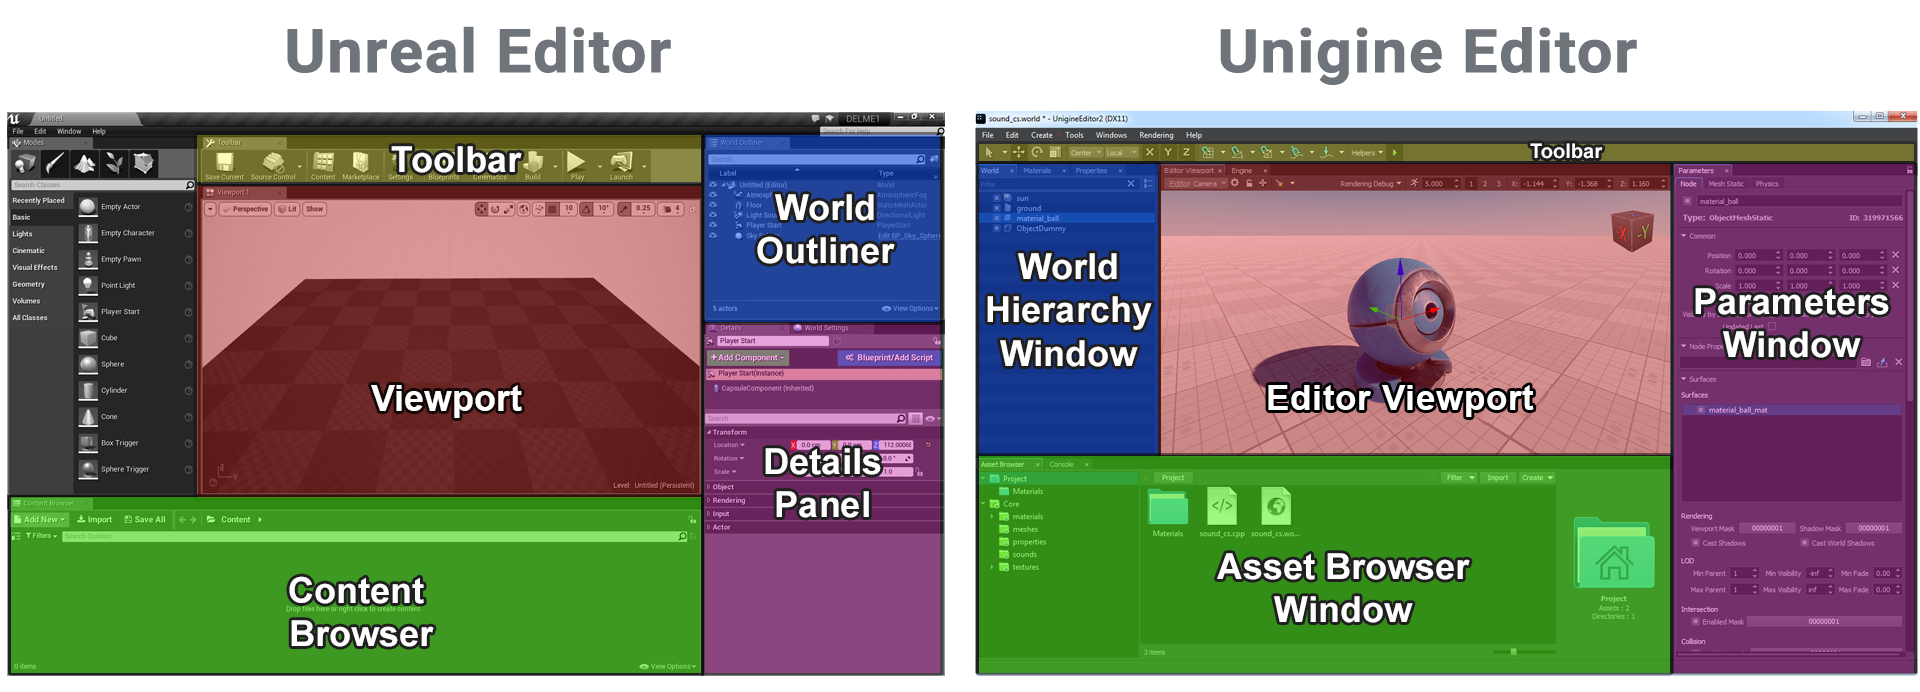 Unreal and UNIGINE Editor UI Comparison (click to enlarge)